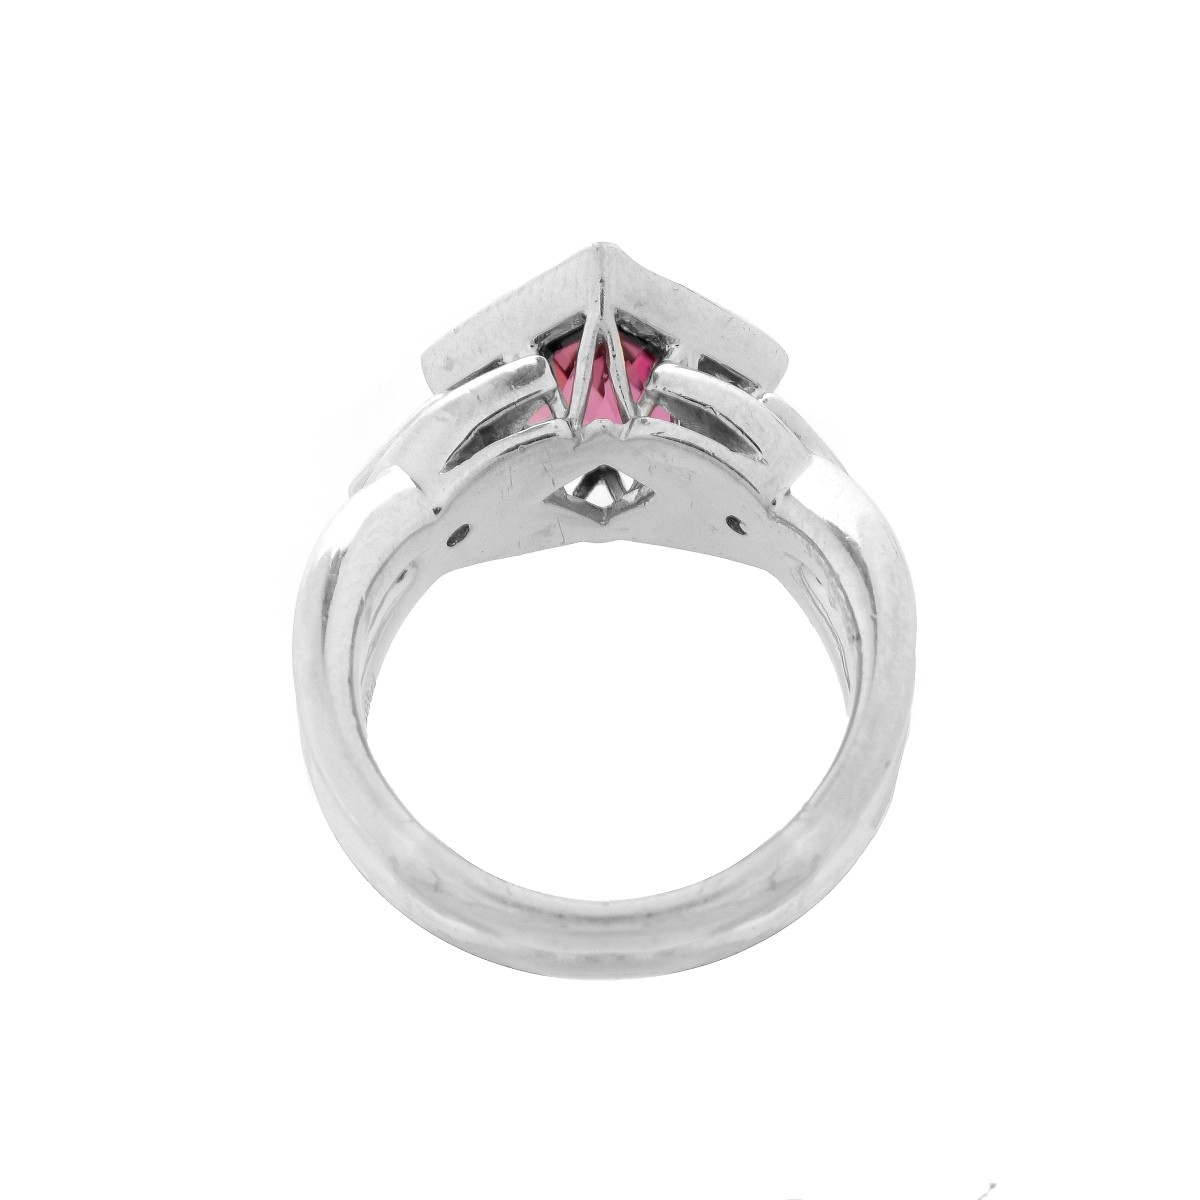 Pink Tourmaline, Diamond and Platinum Ring